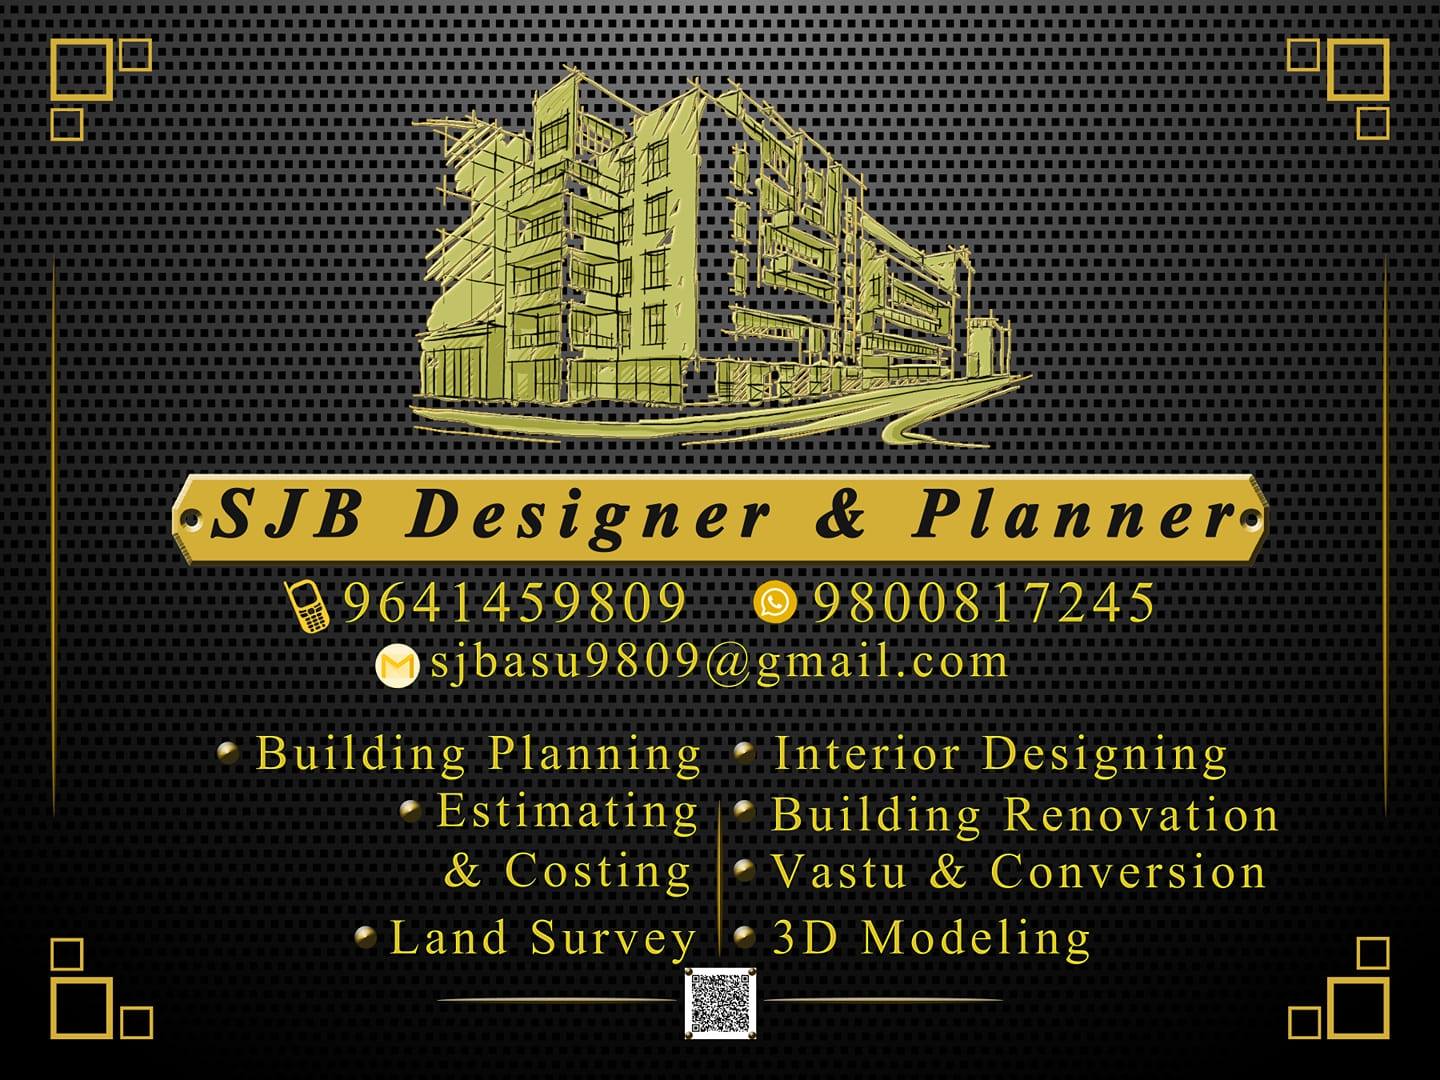 SJB Designer & Planner|Architect|Professional Services